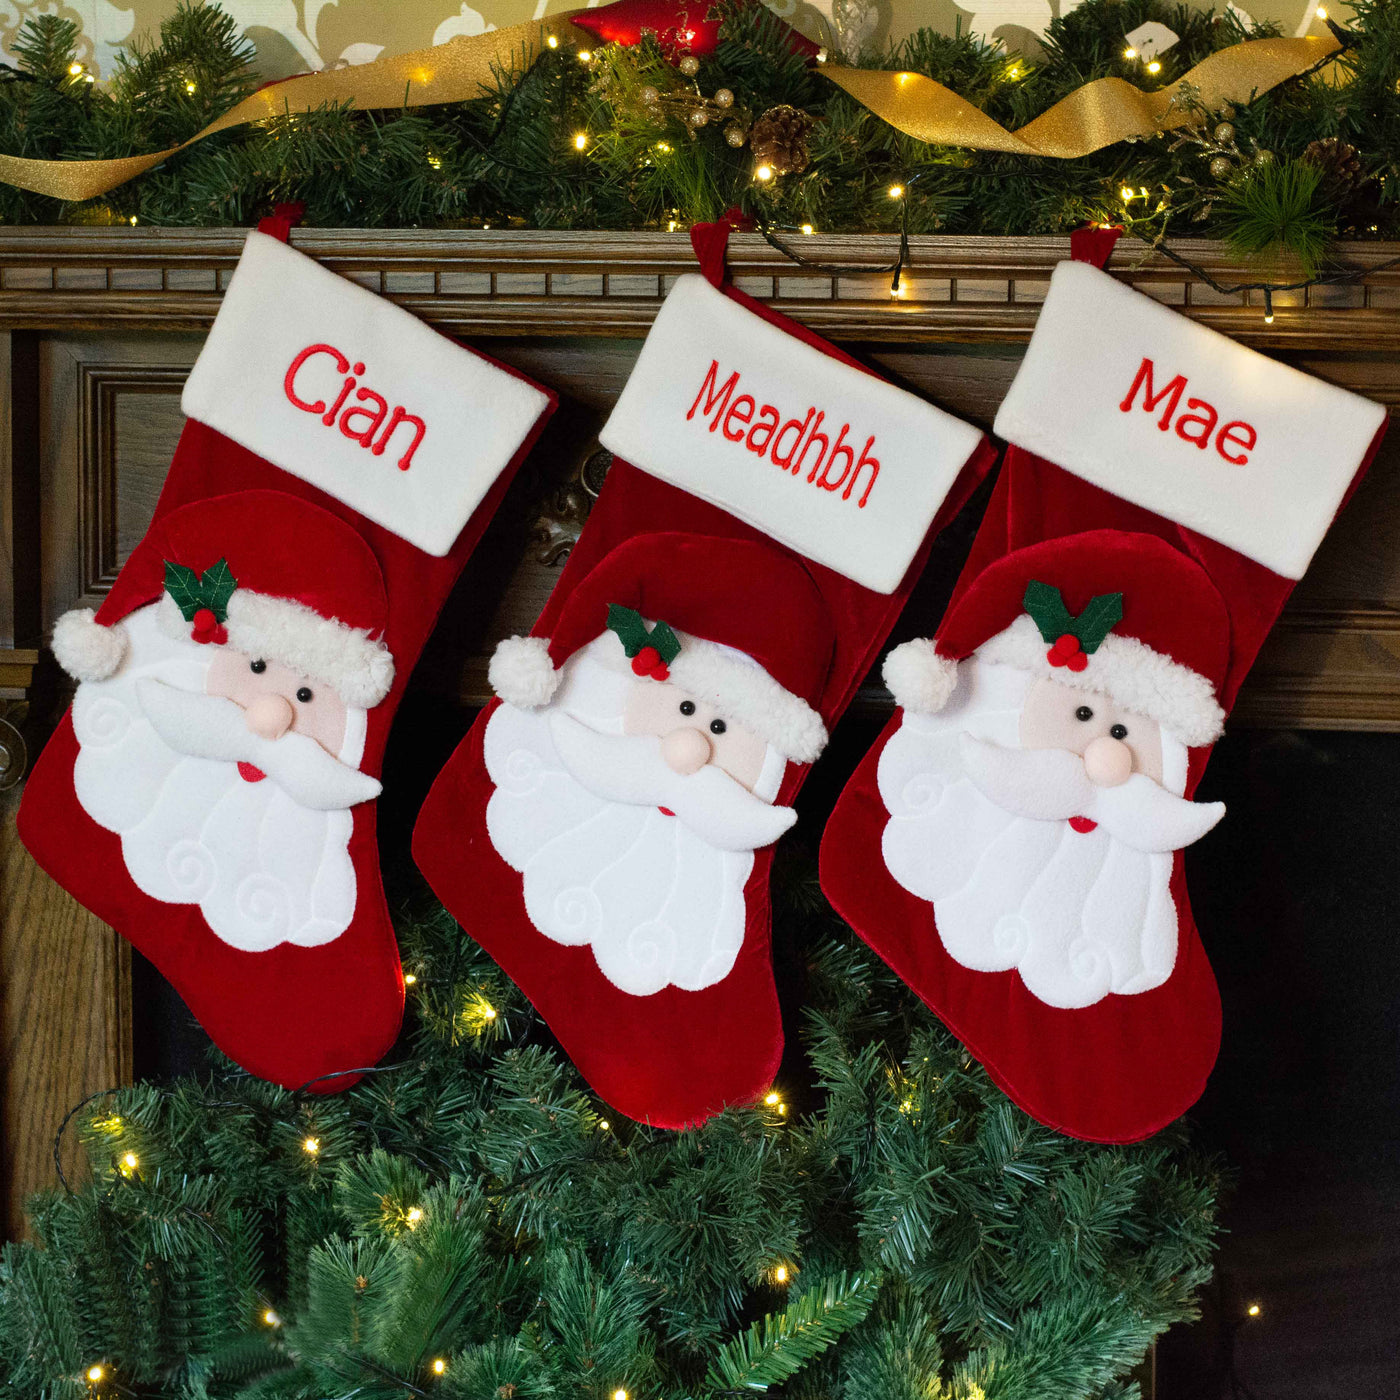 Personalised Christmas Stockings | Personalised Stockings | Personalised Christmas Stocking | WowWee.ie